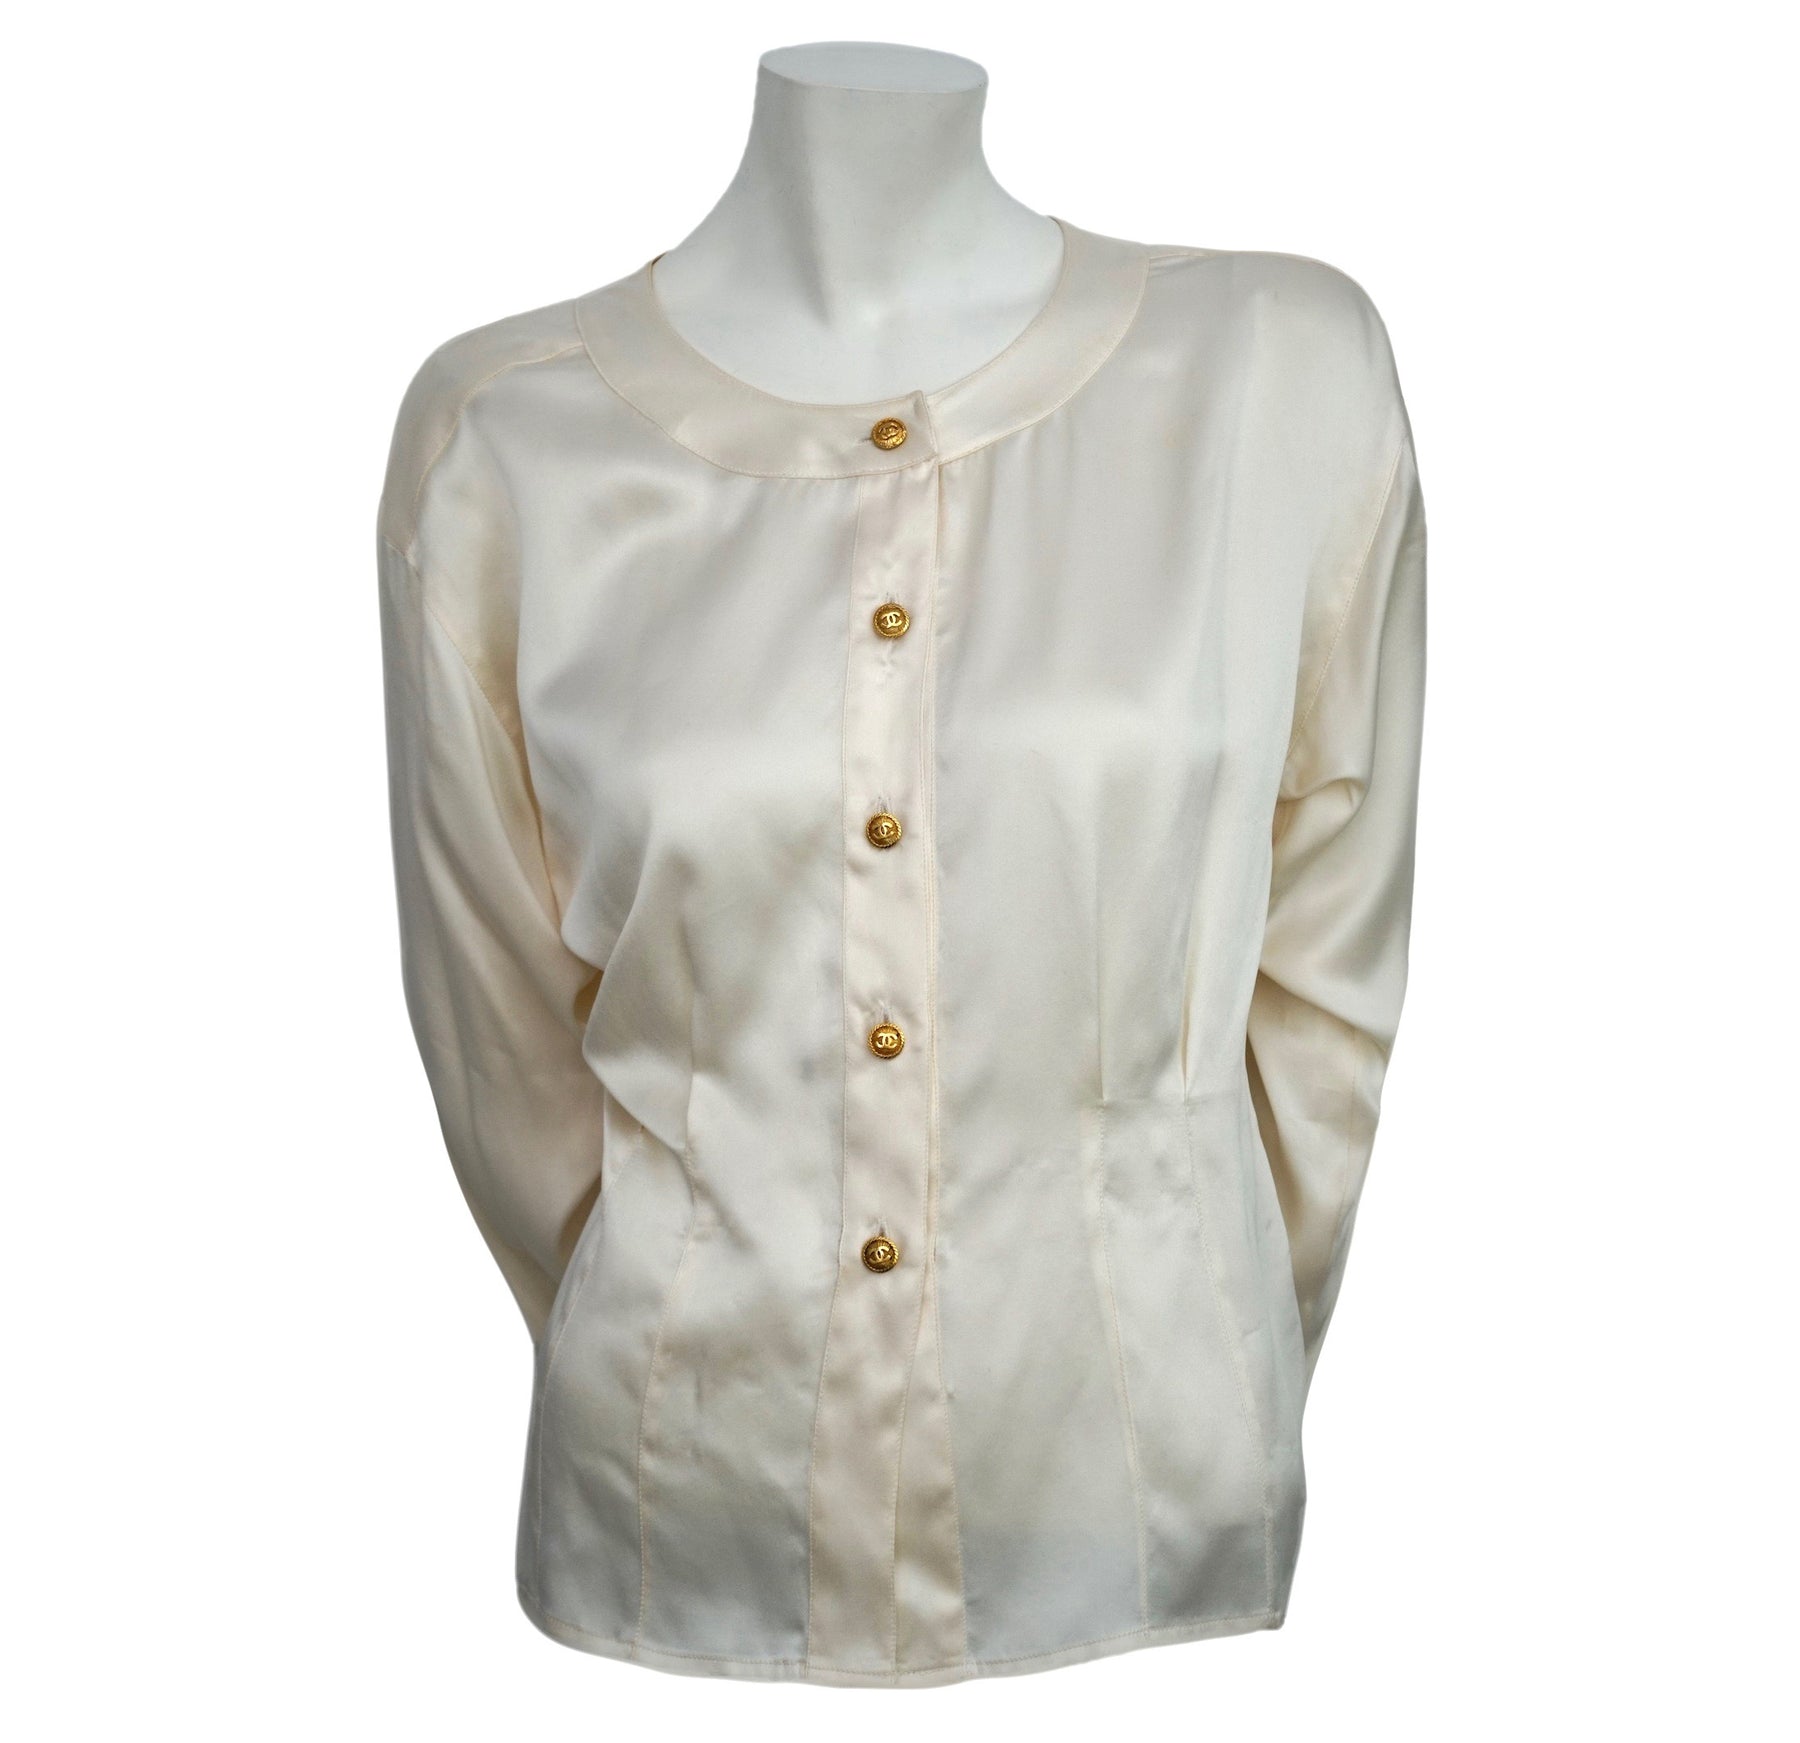 vintage chanel white dress shirt